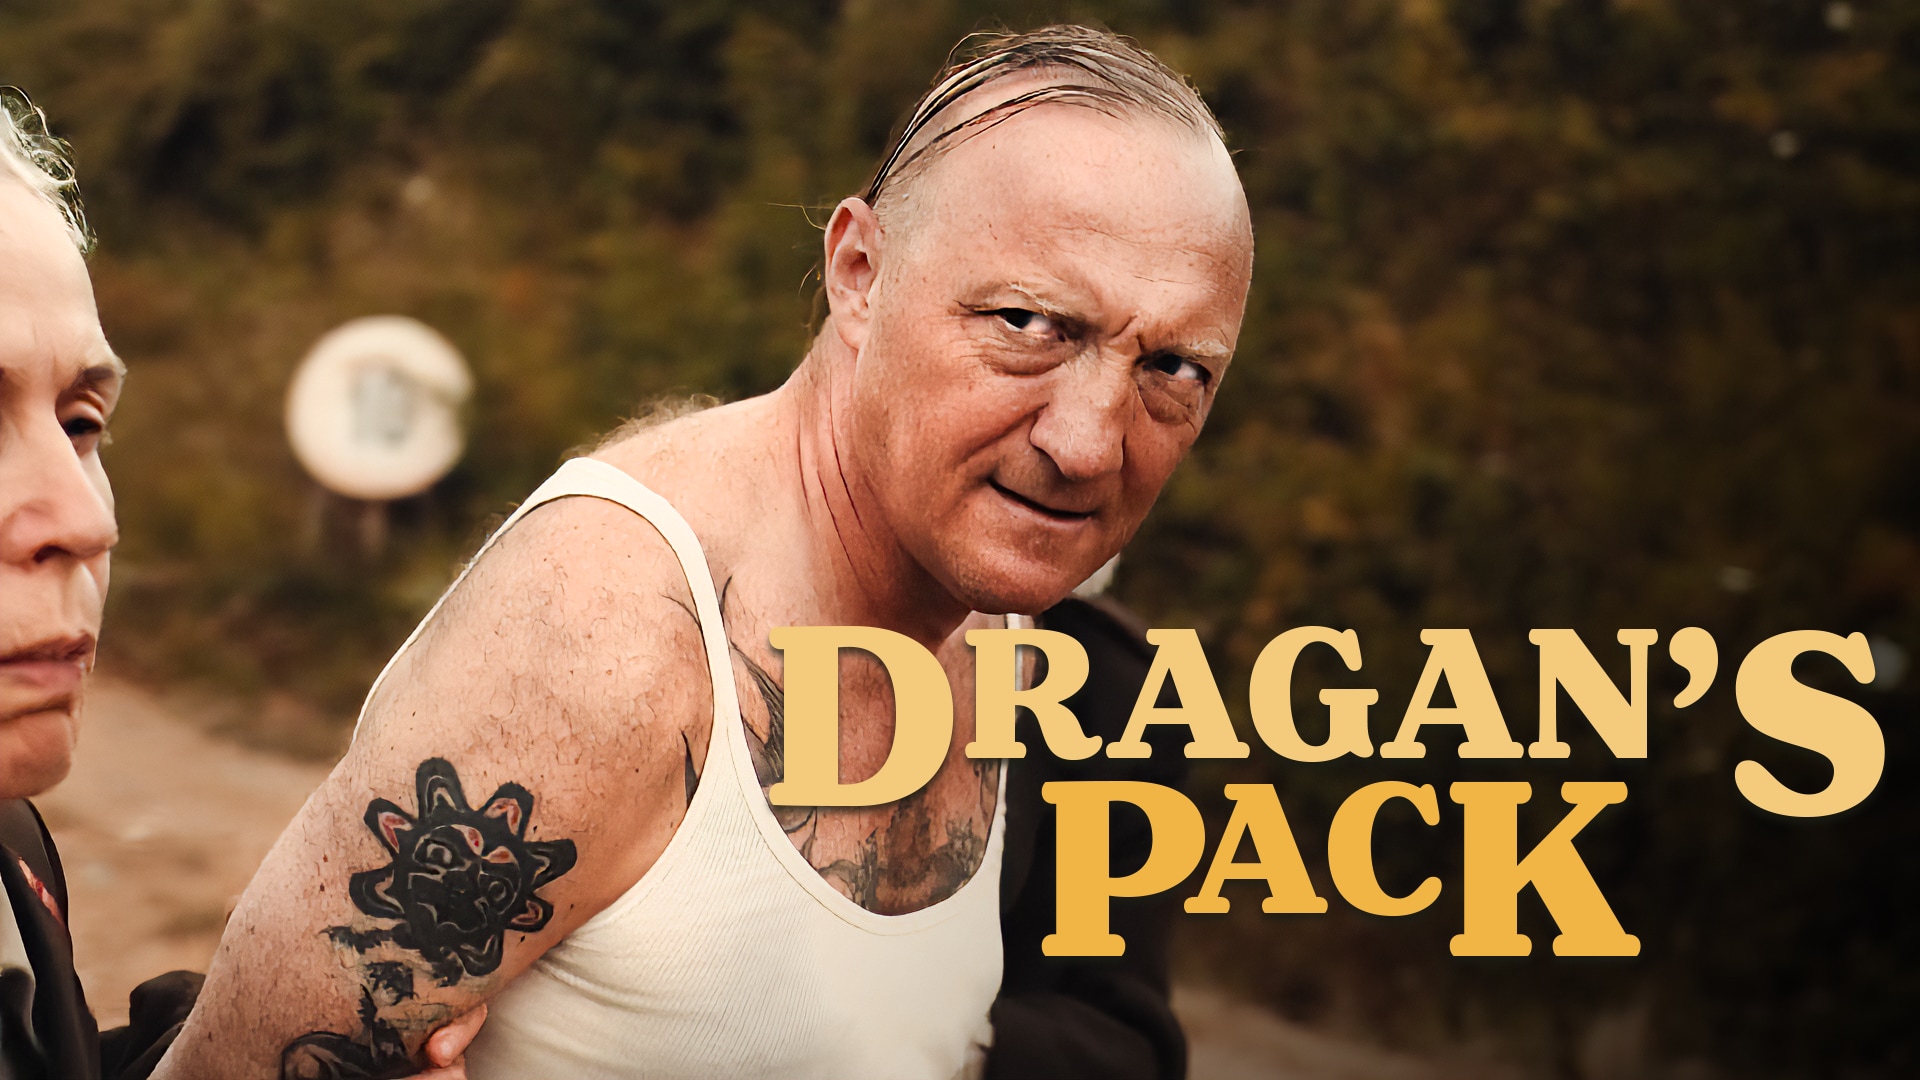 Dragan's Pack